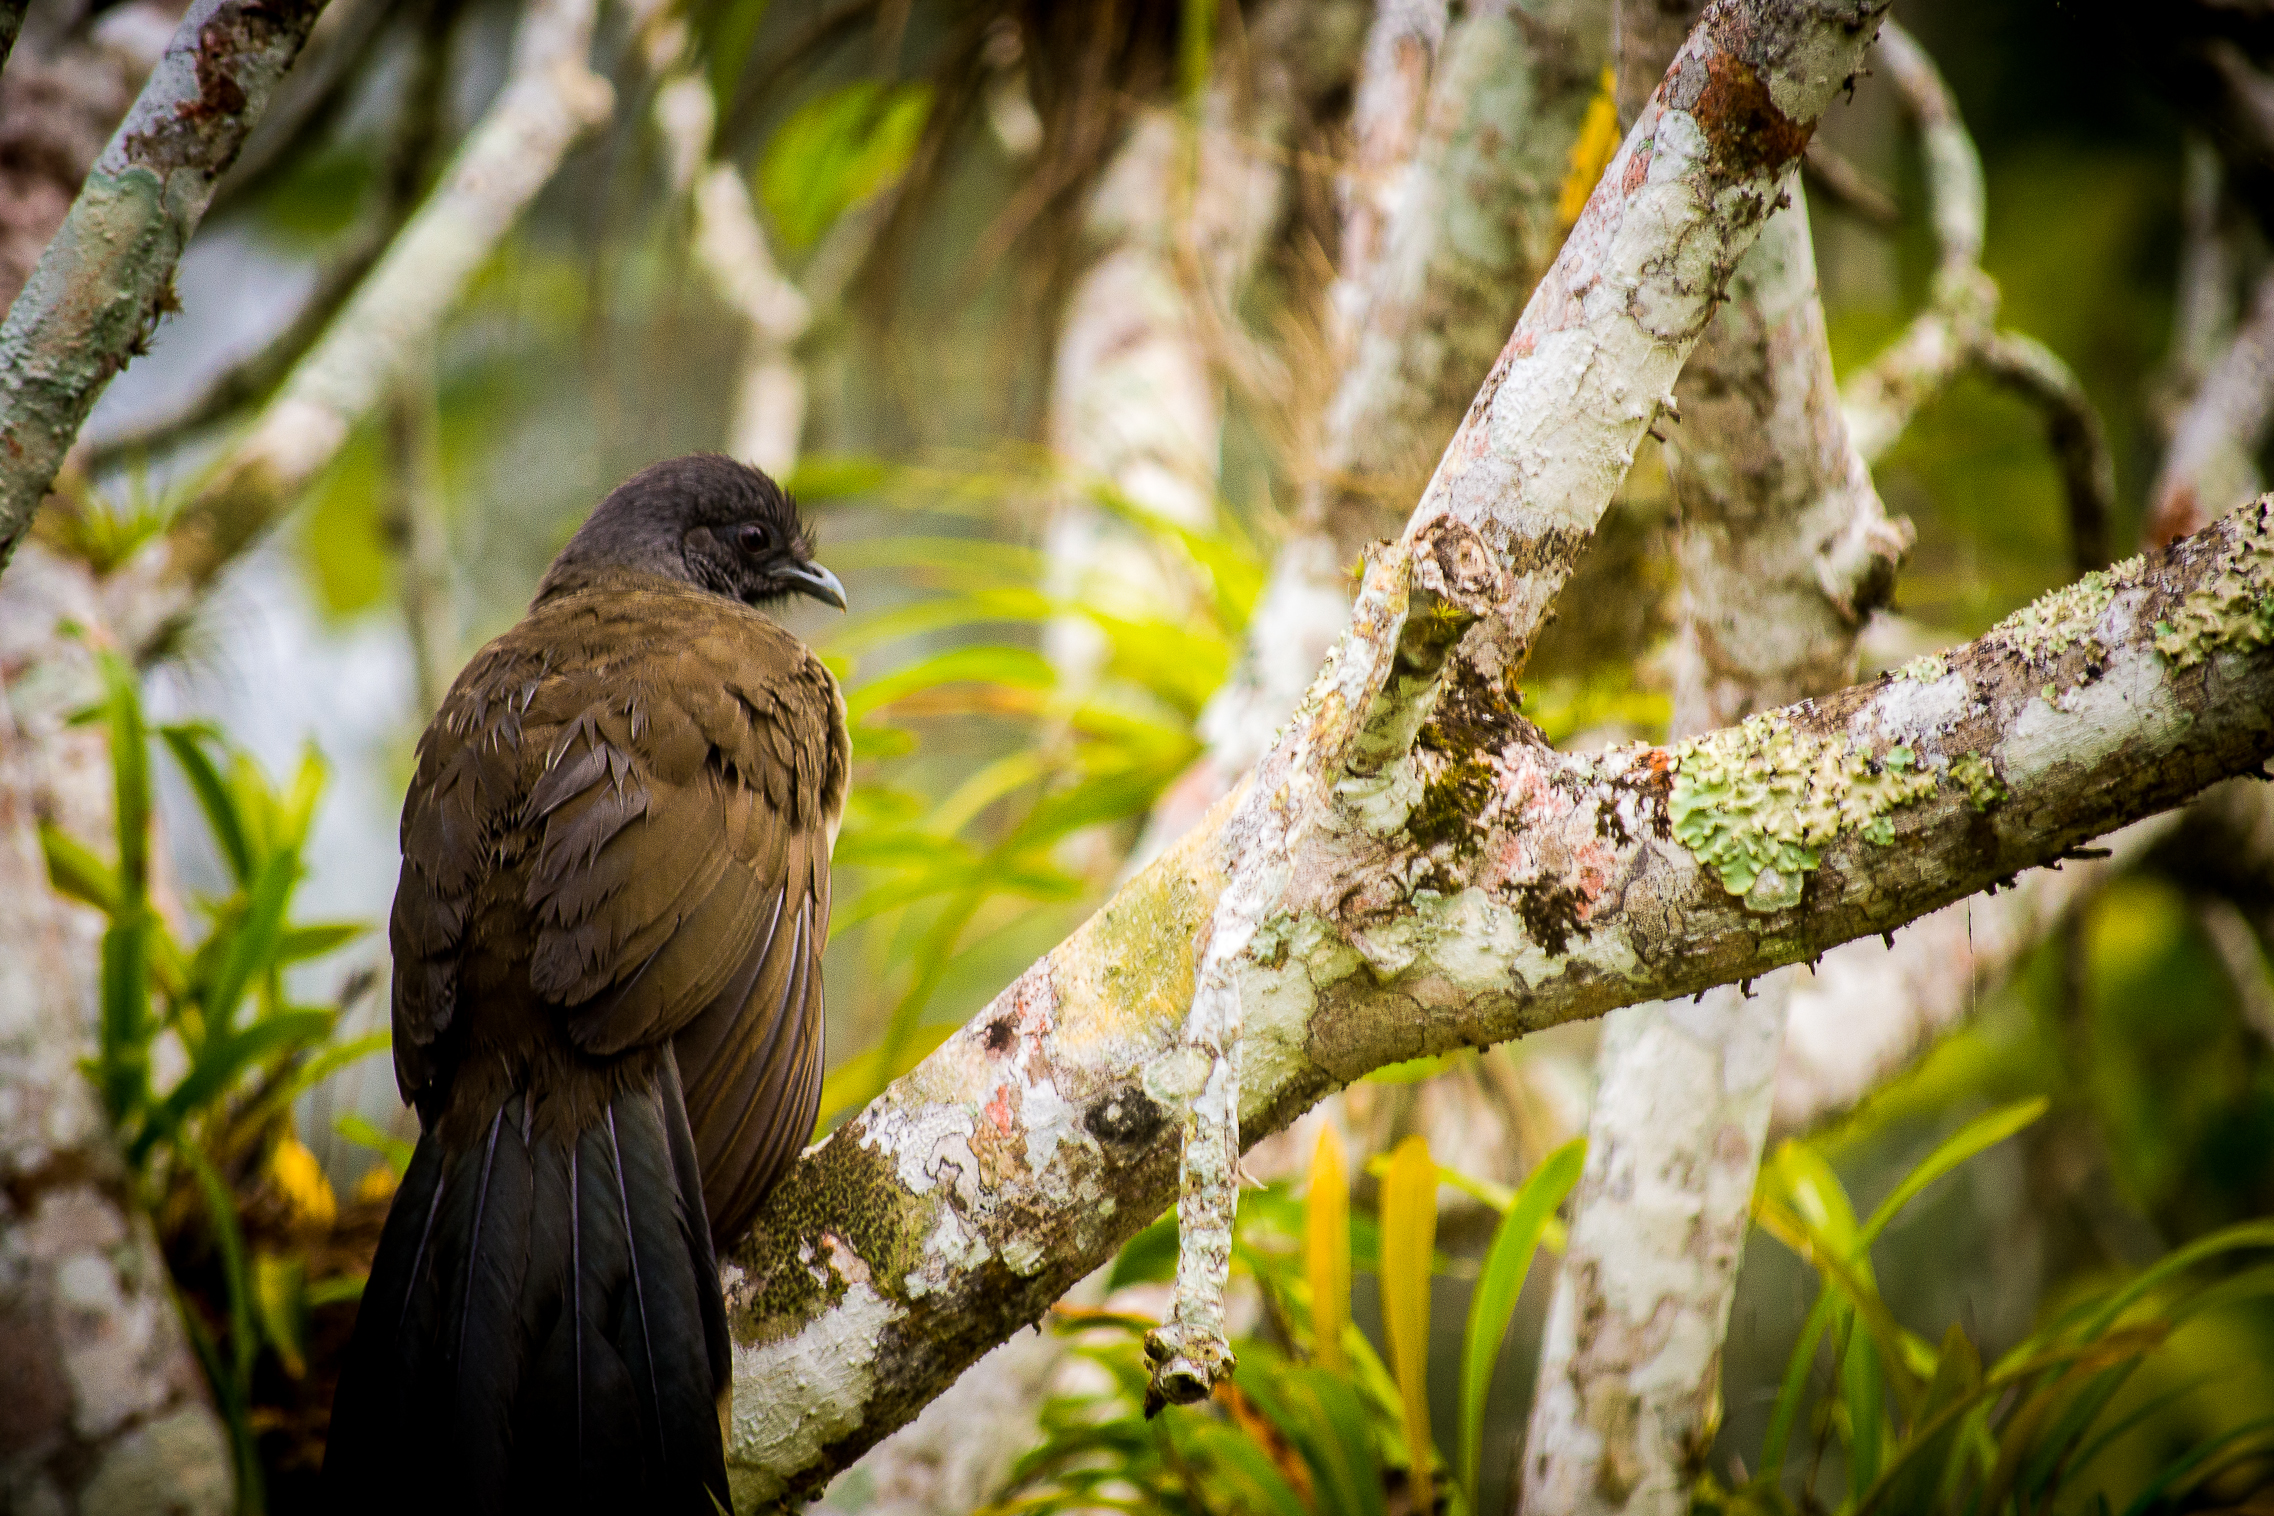 Belize’s Bountiful Birds Showcased in latest Audubon Magazine